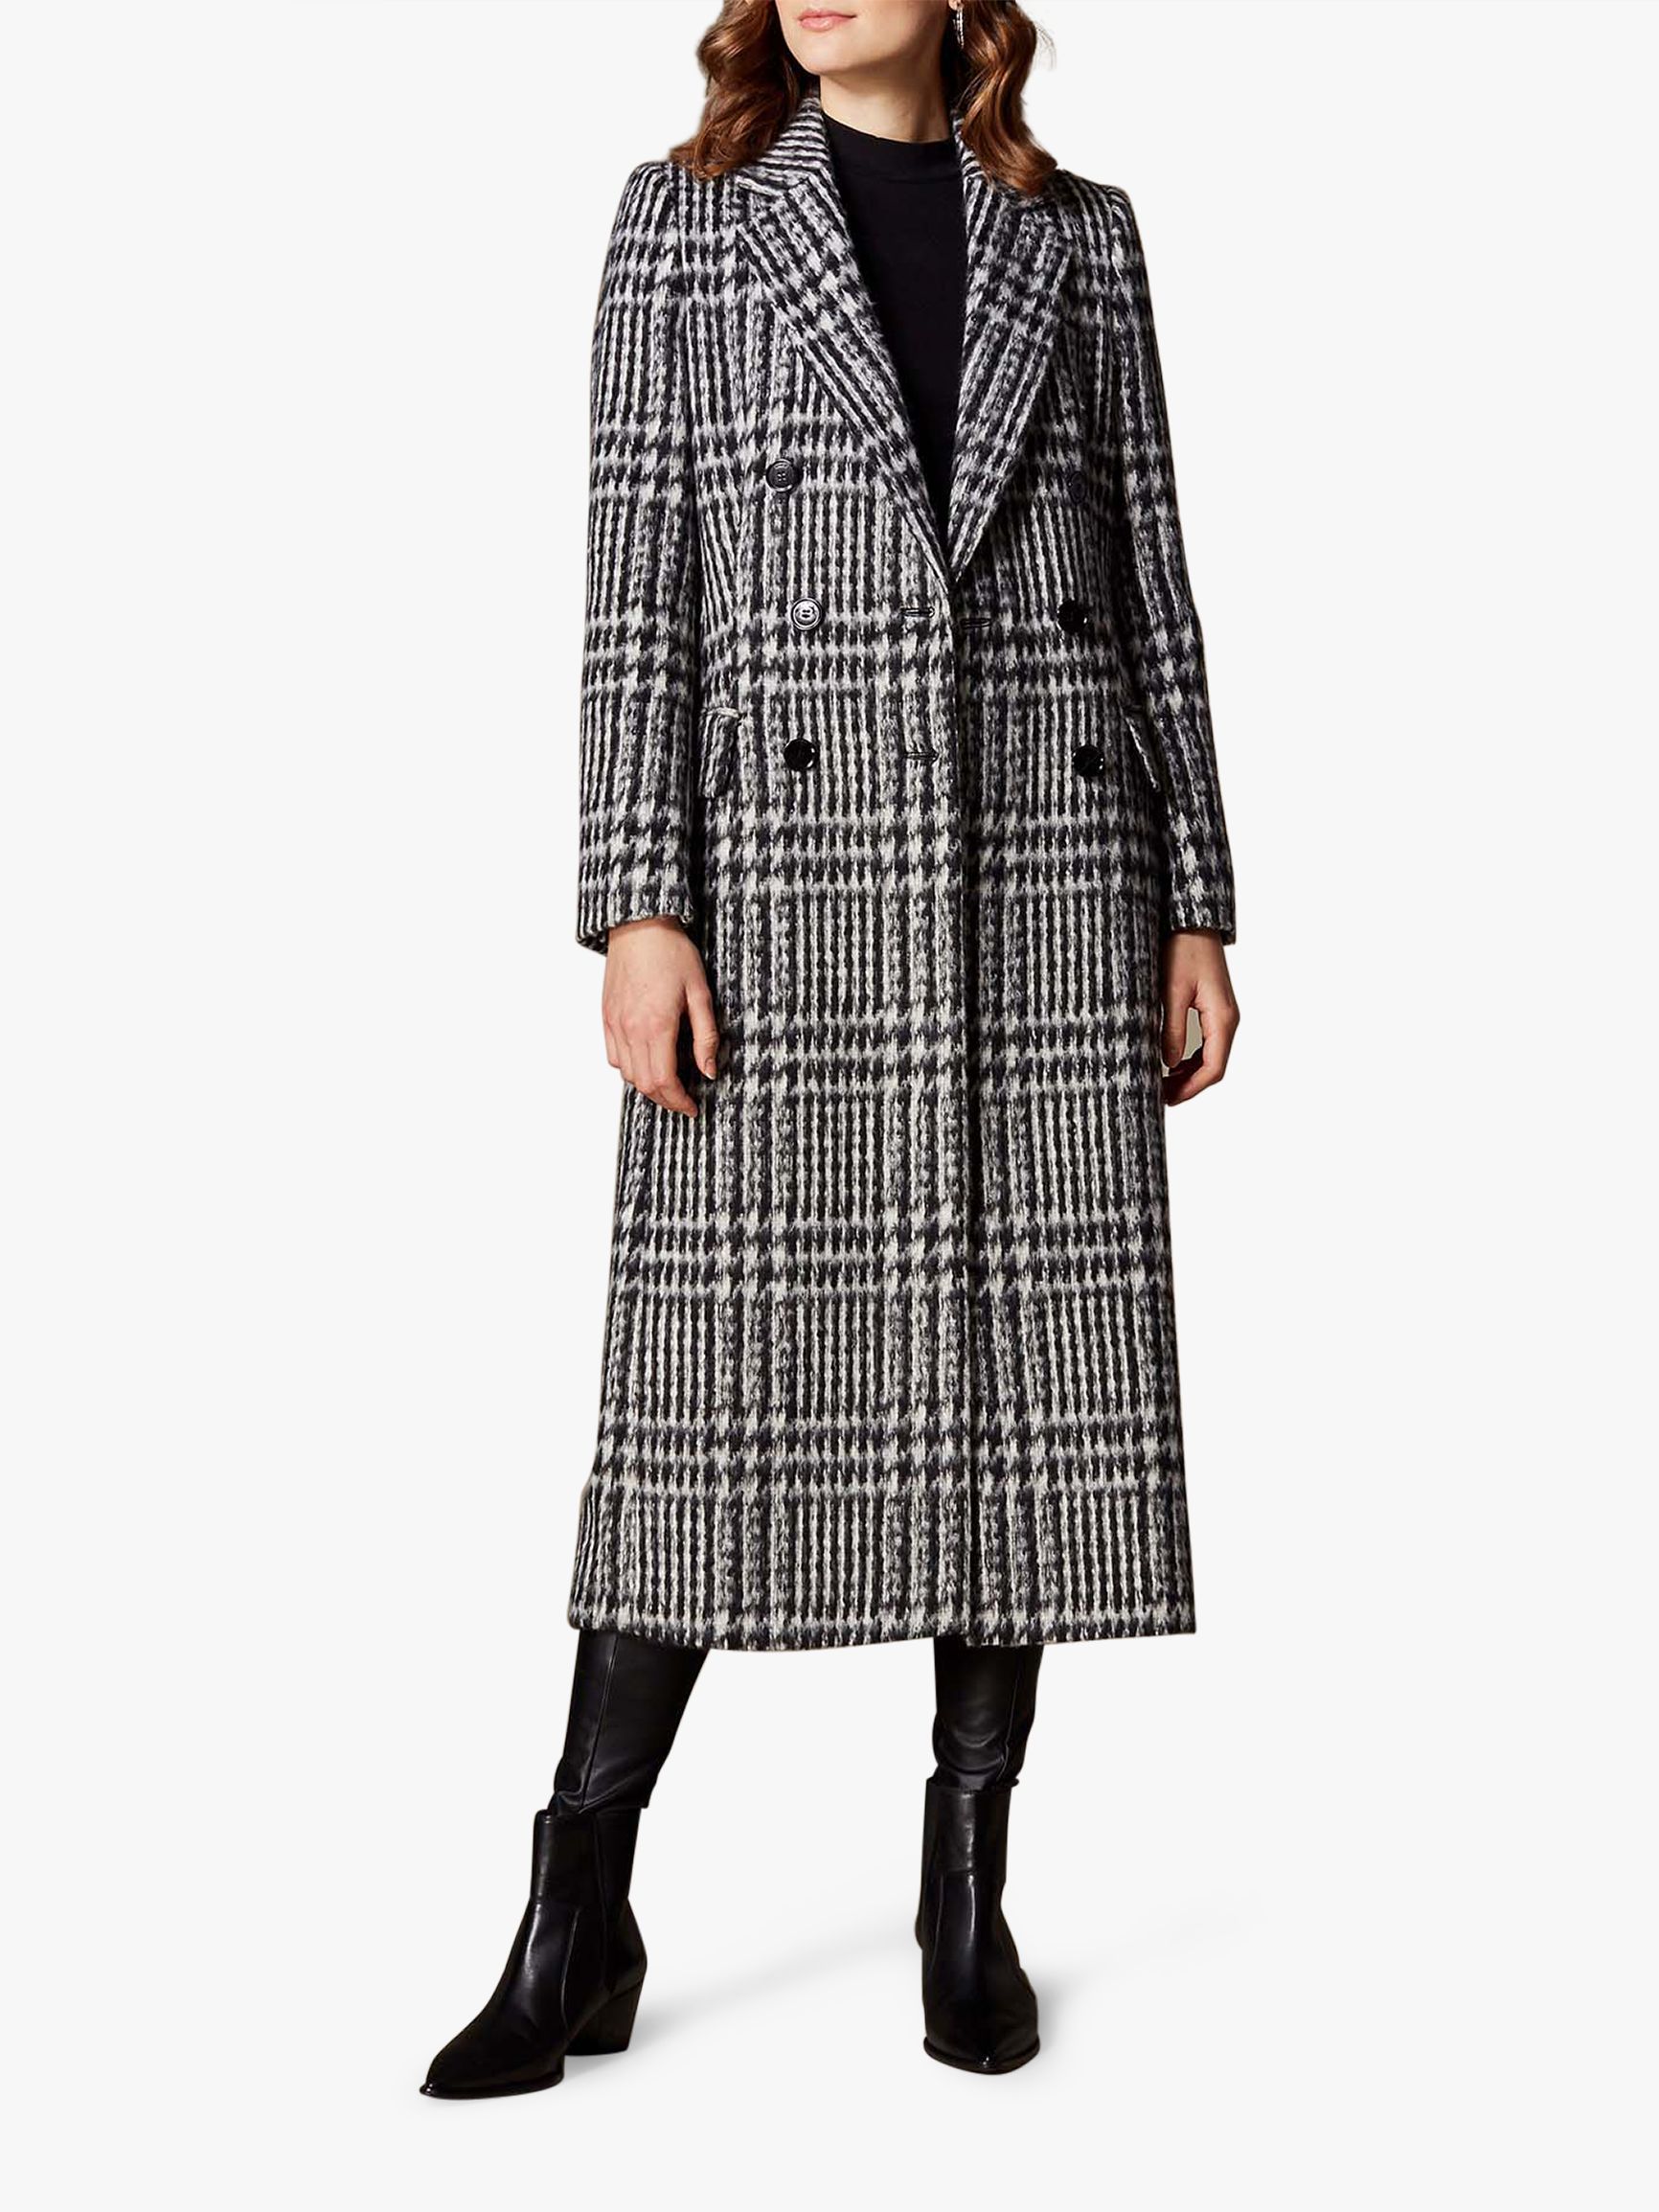 Karen Millen Tailored Check Coat, Black/Multi